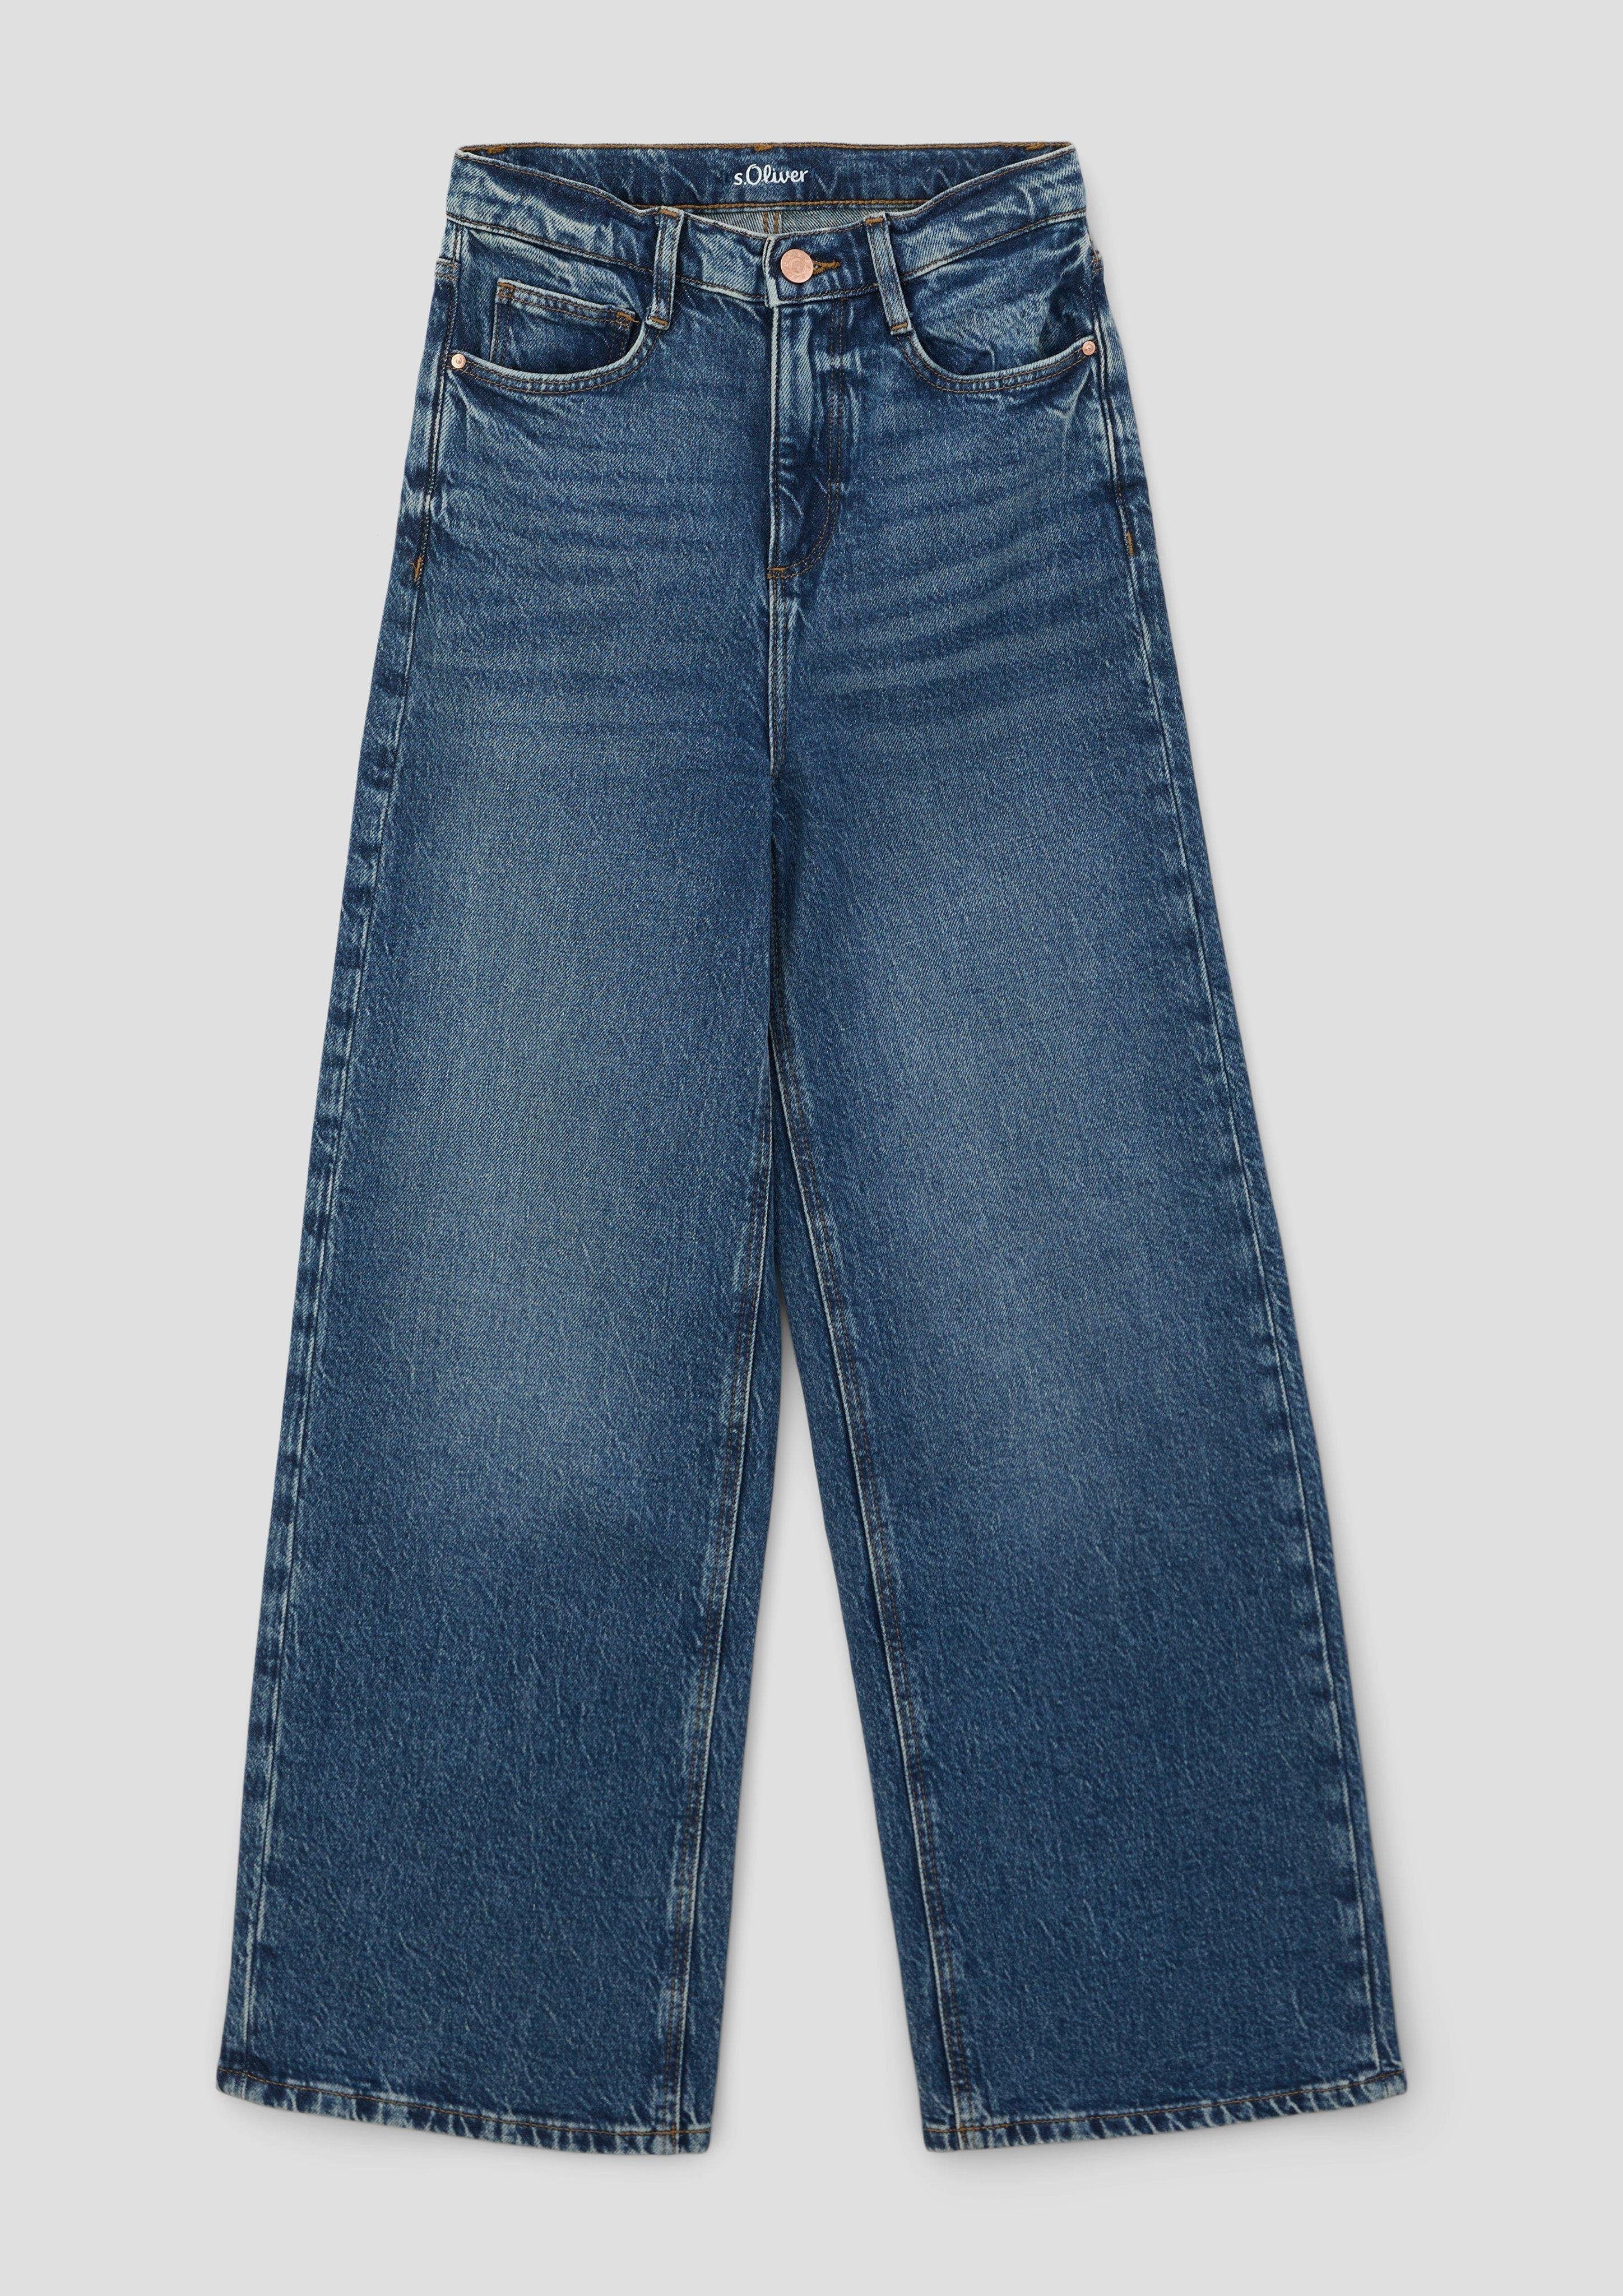 Stoffhose Regular Wide / High s.Oliver Jeans / Waschung Fit Super / Rise Leg